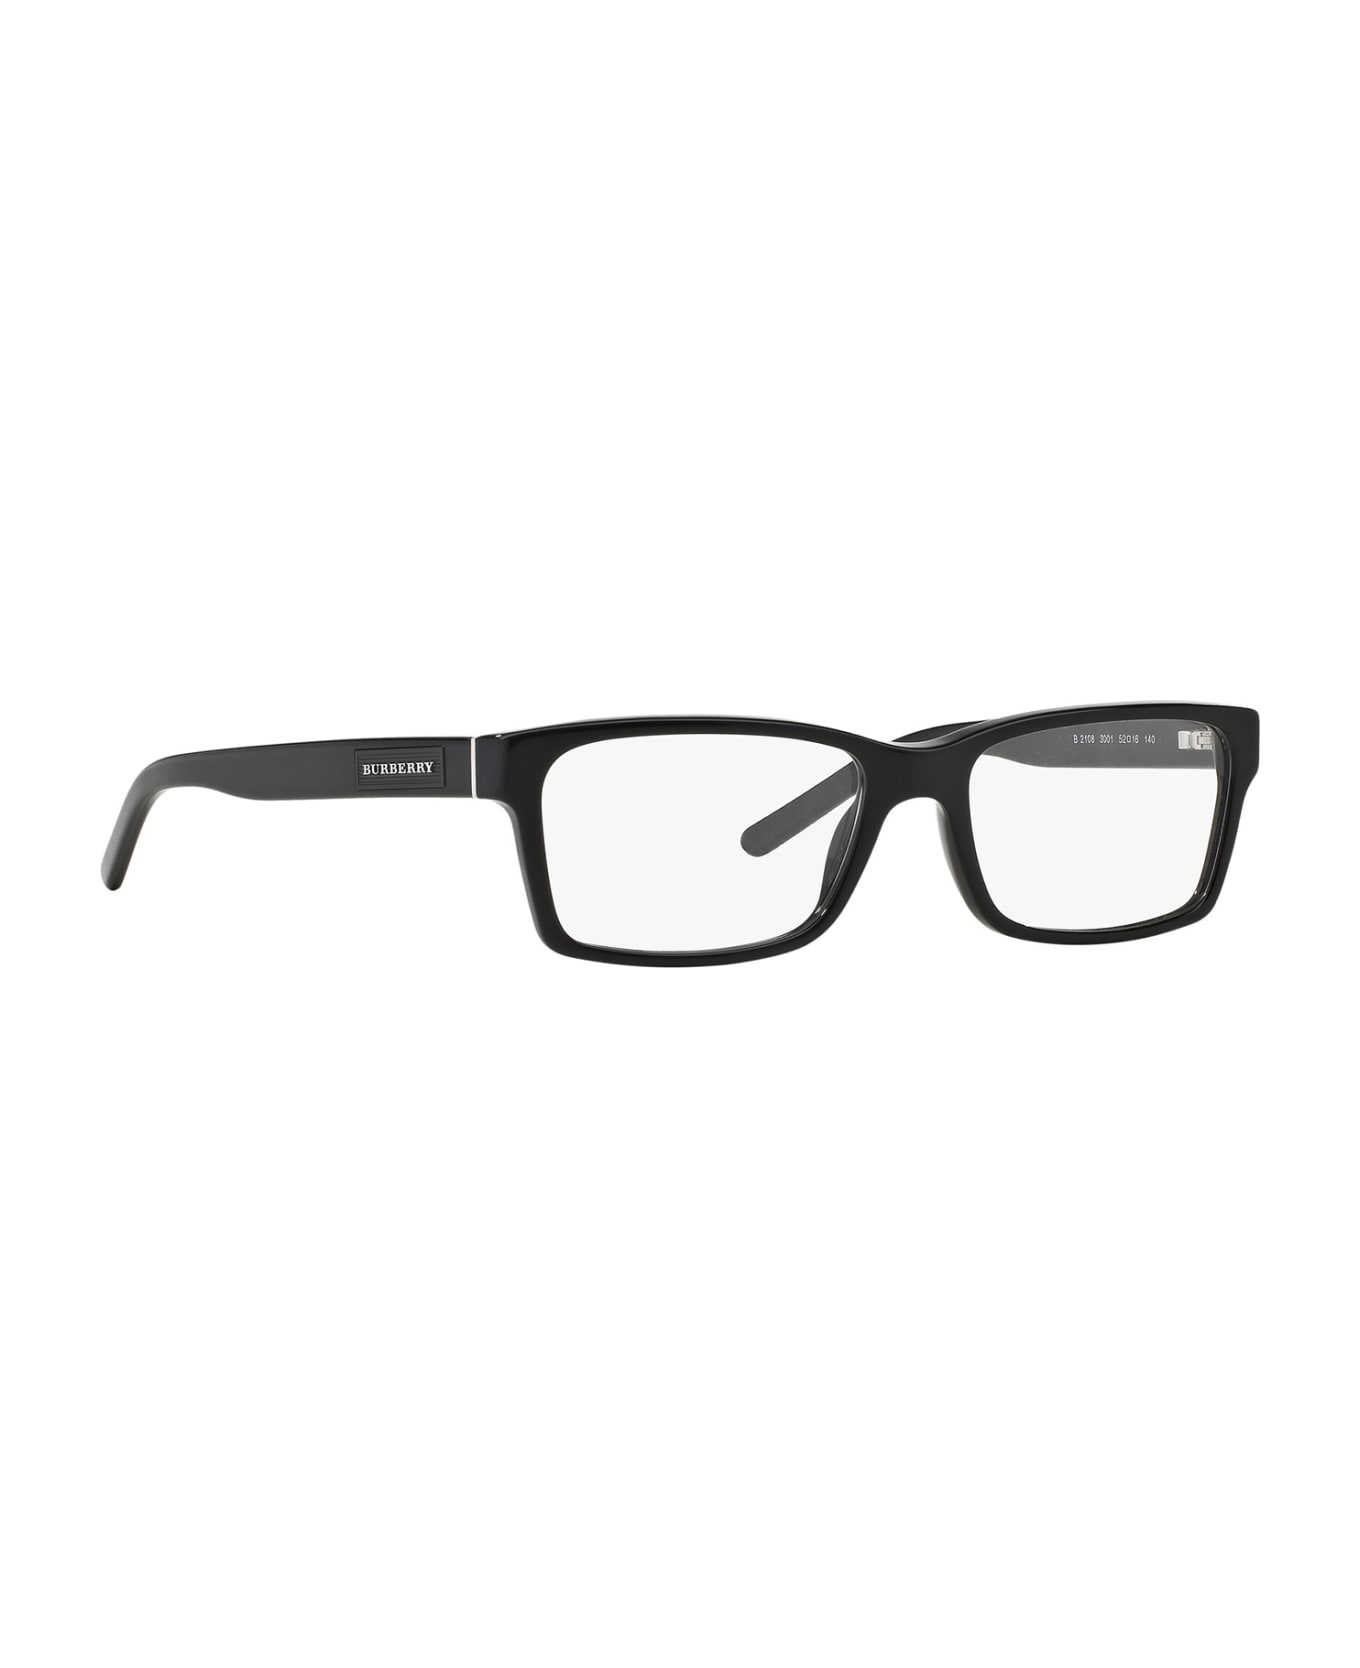 Burberry Eyewear Be2108 Black Glasses - Black